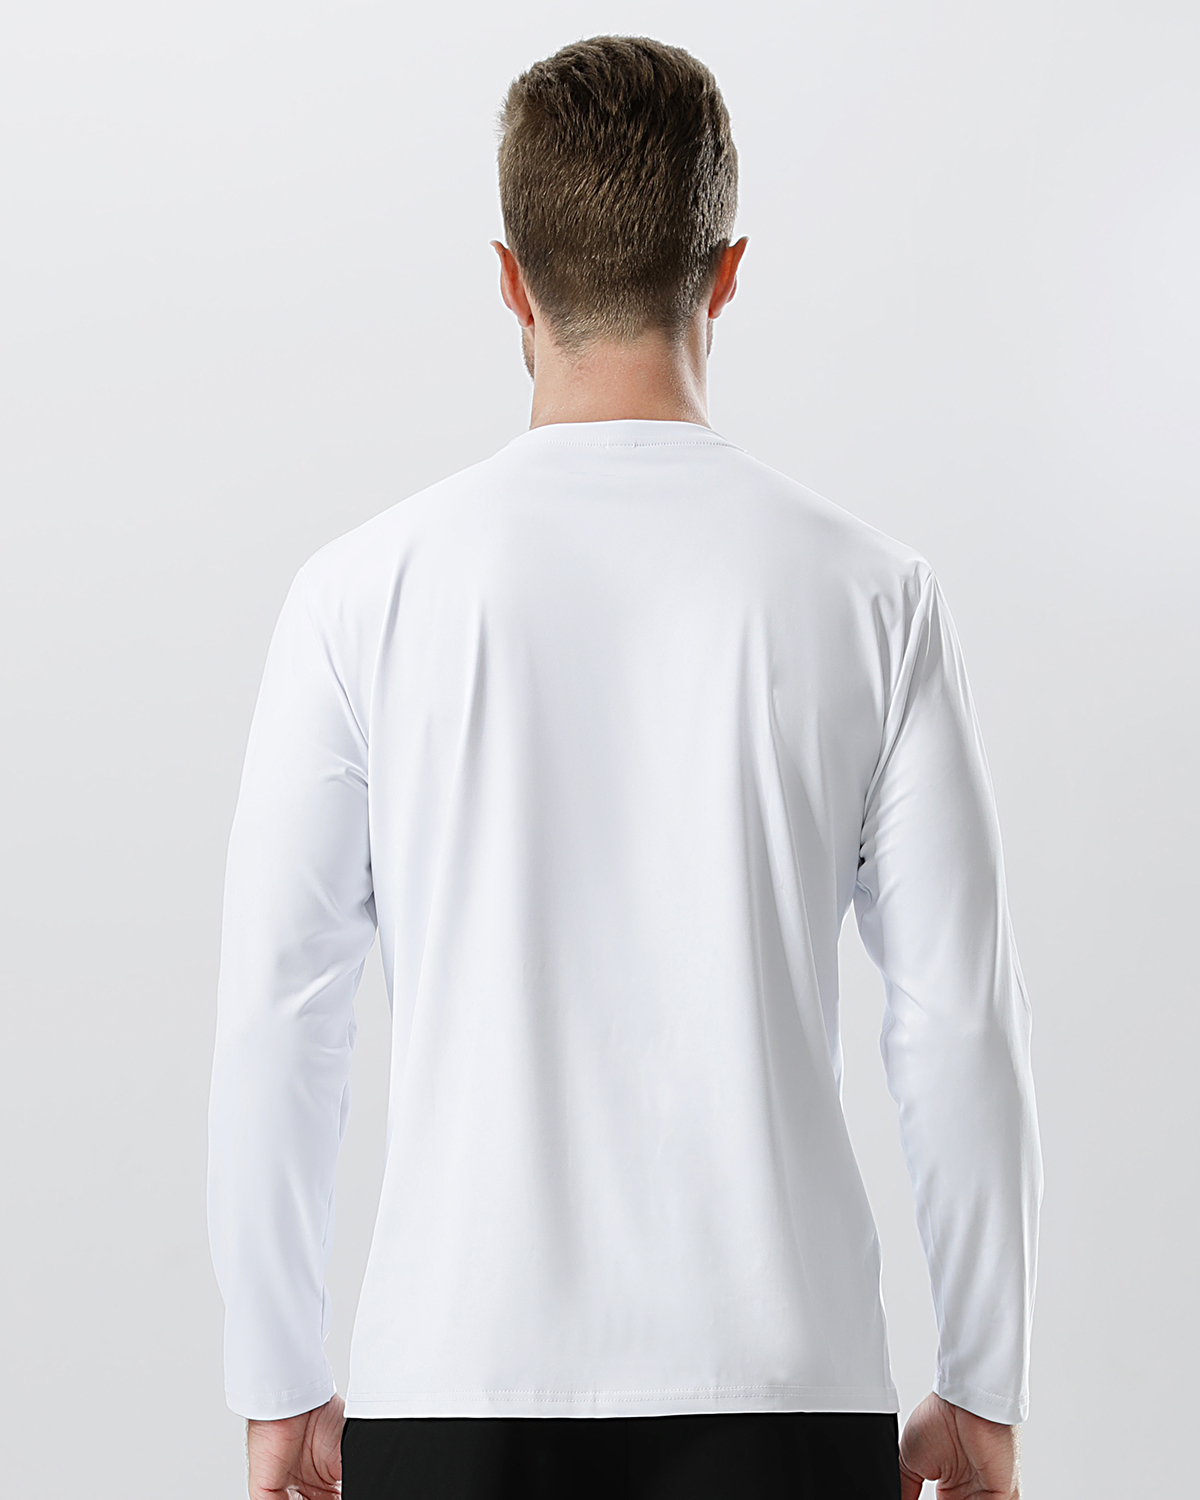  Men‘s Quick Drying Long Sleeve T-shirt 